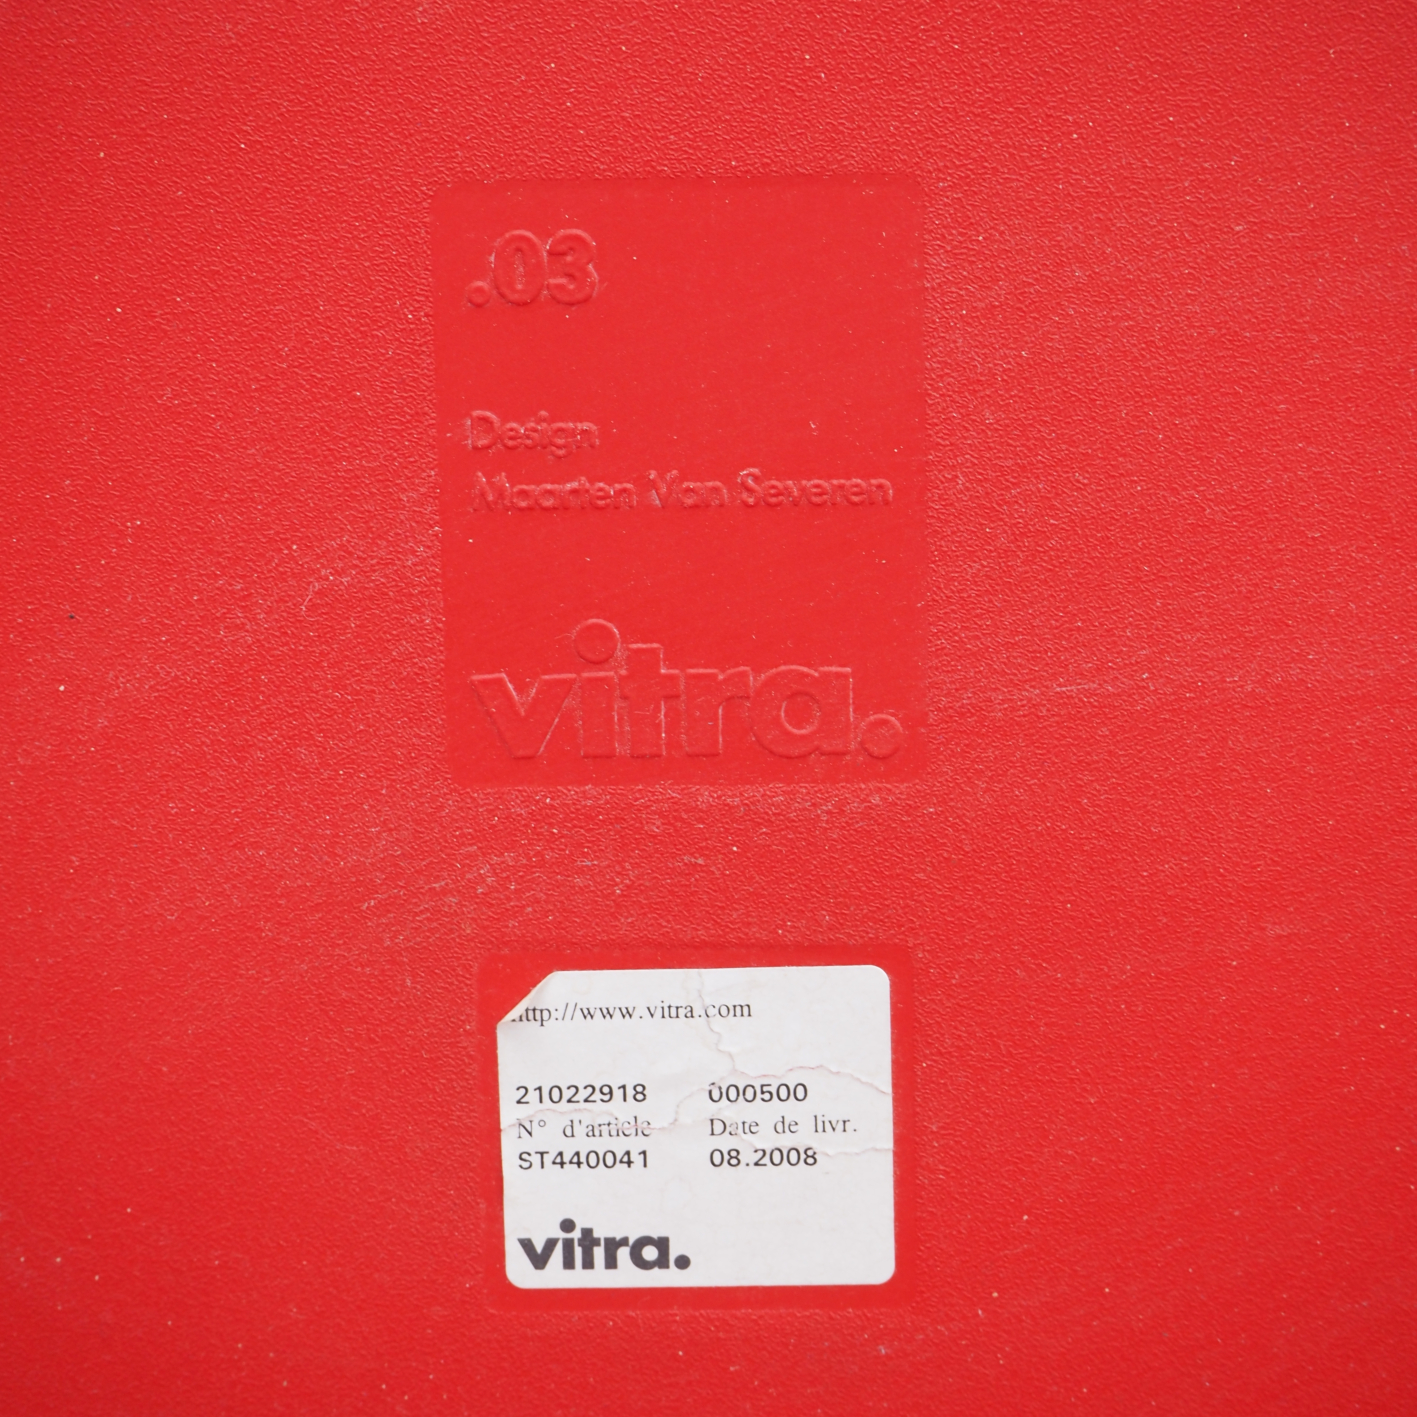 High chair '03' by Maarten Van Severen for Vitra - Red